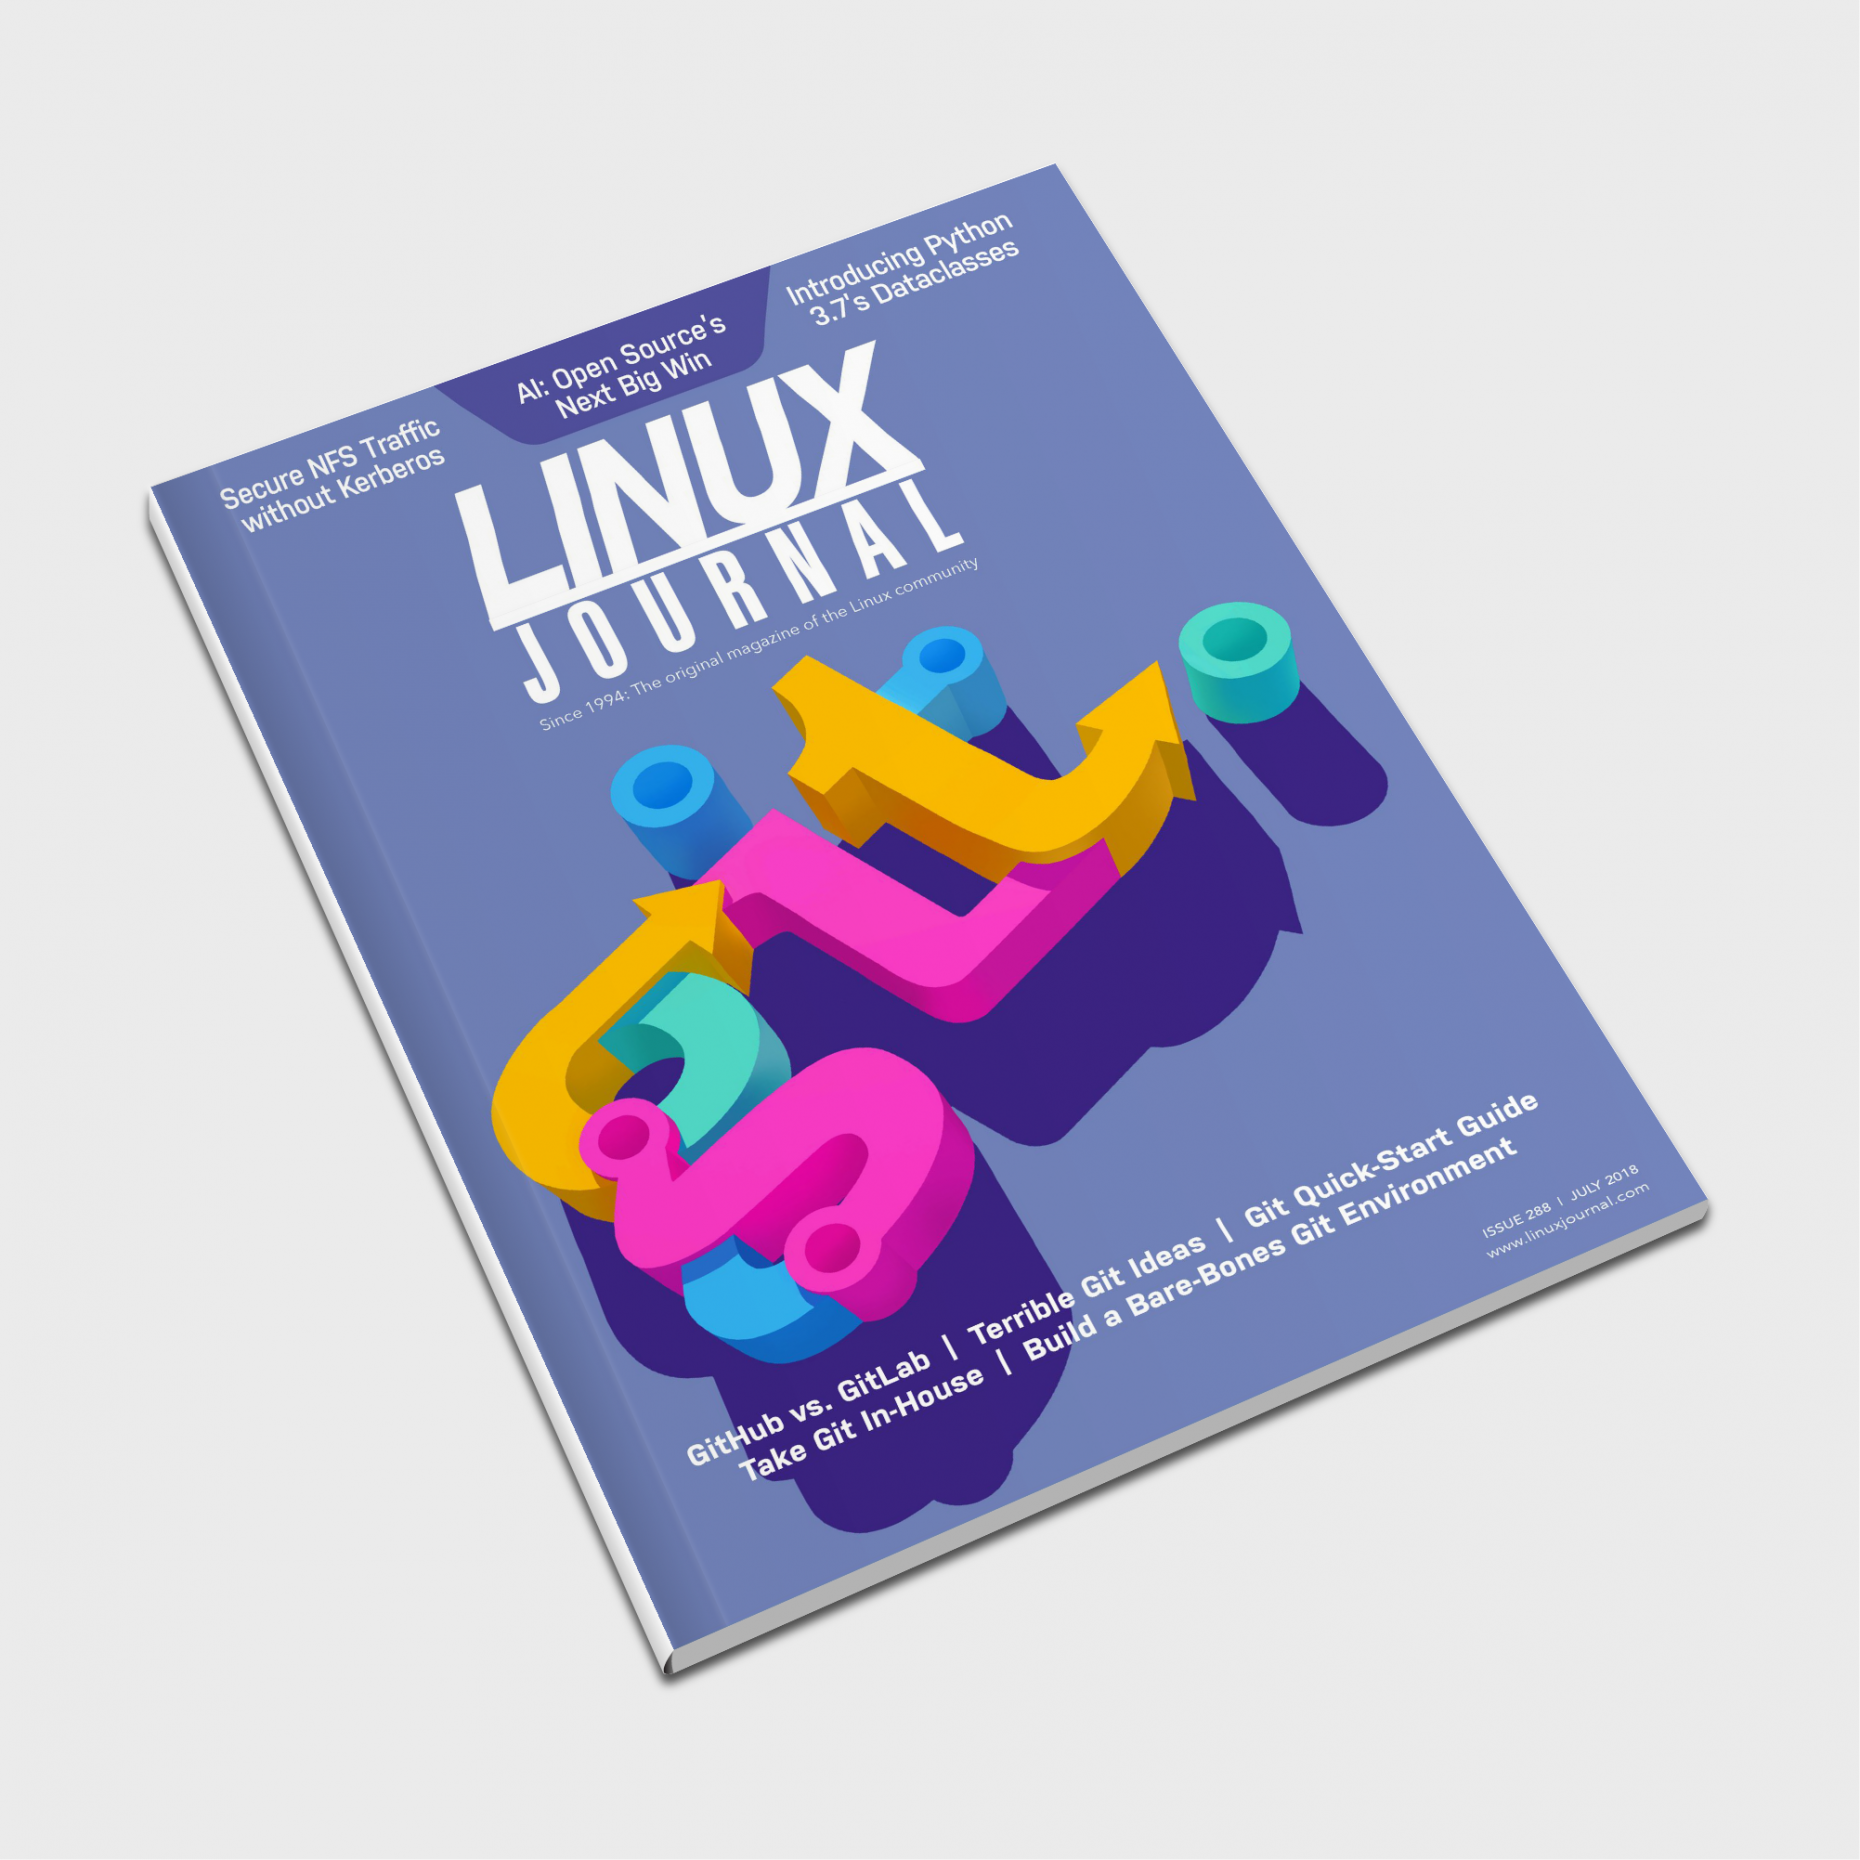 Linux Journal 'Git' Cover